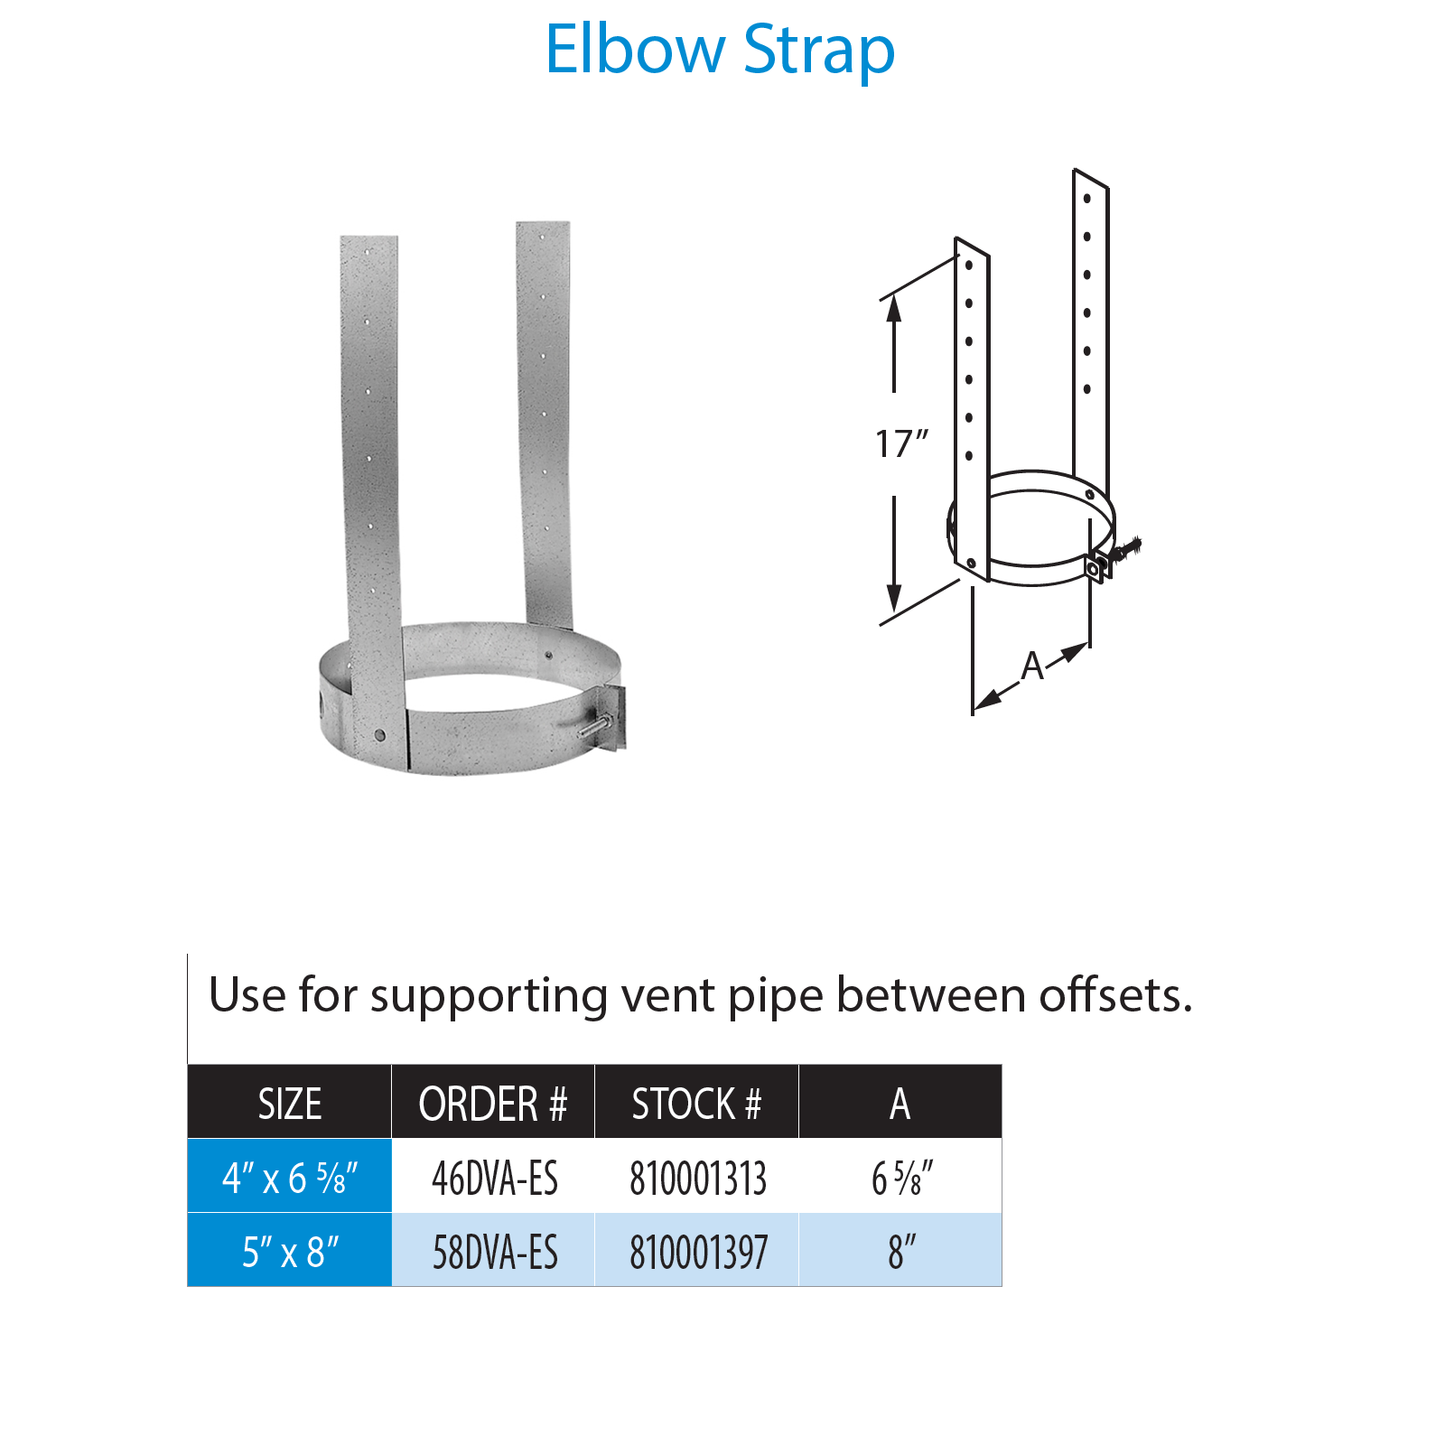 DuraVent DirectVent Pro Elbow Strap | 58DVA-ES